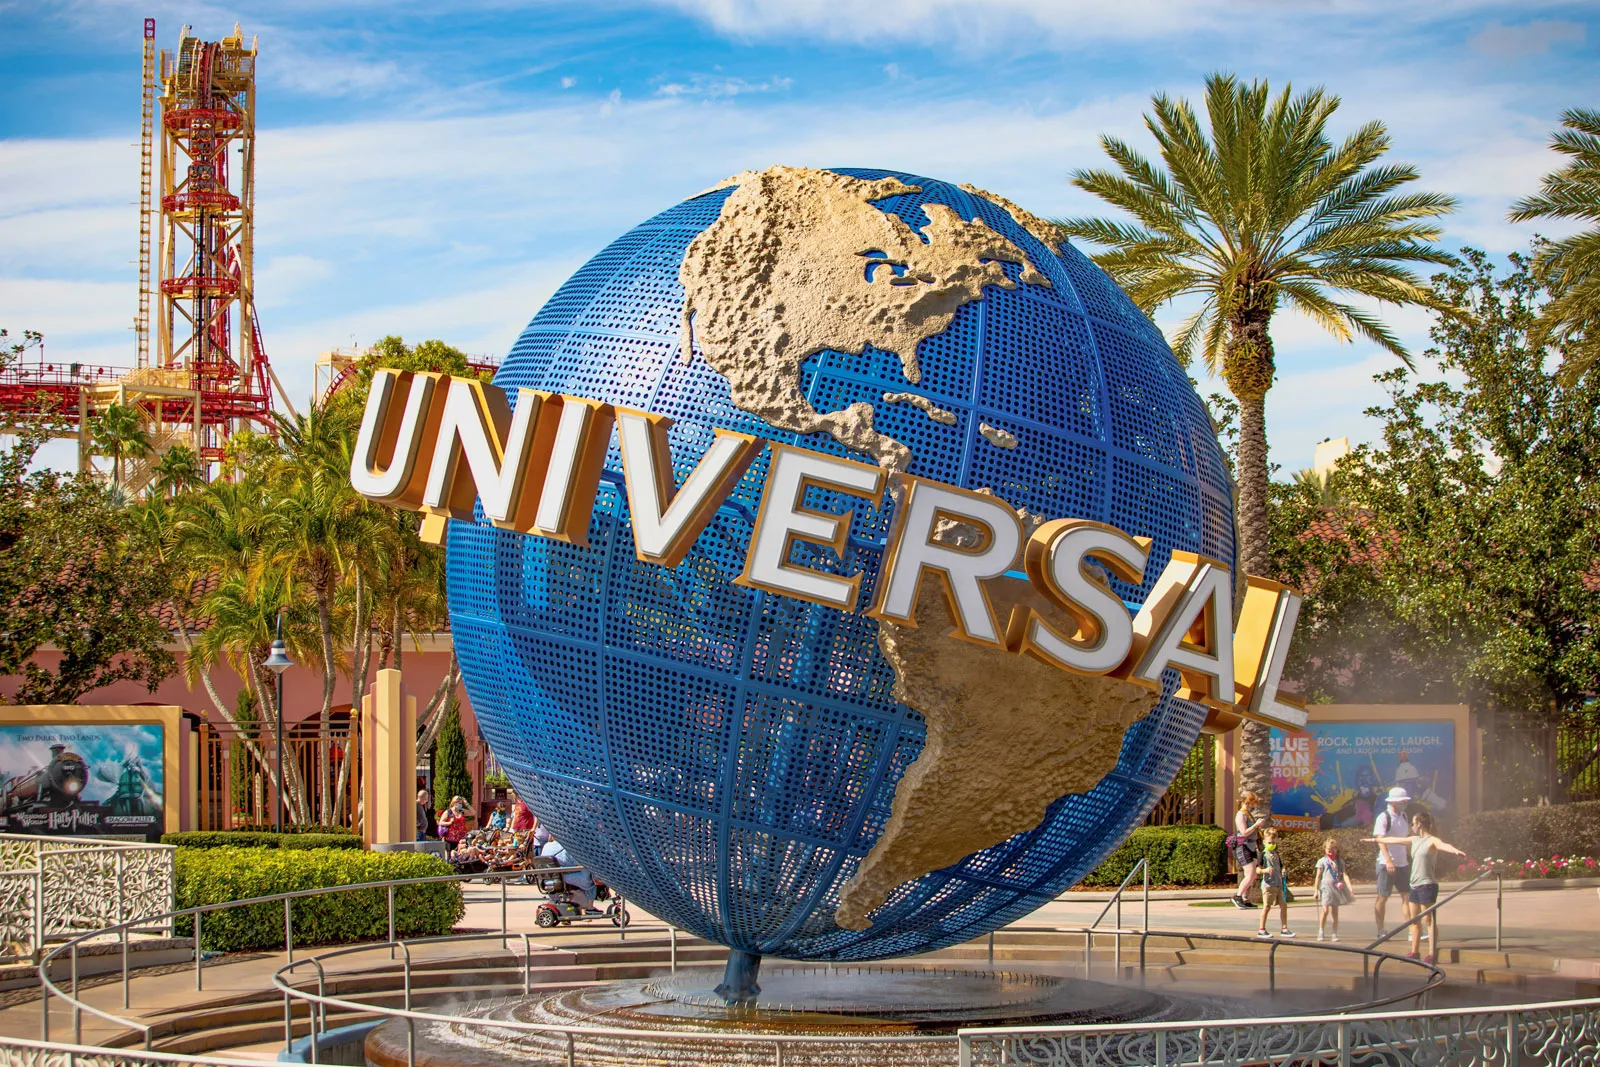 Universal-Studios-logo-globe-fountain-monument-Orlando-Florida